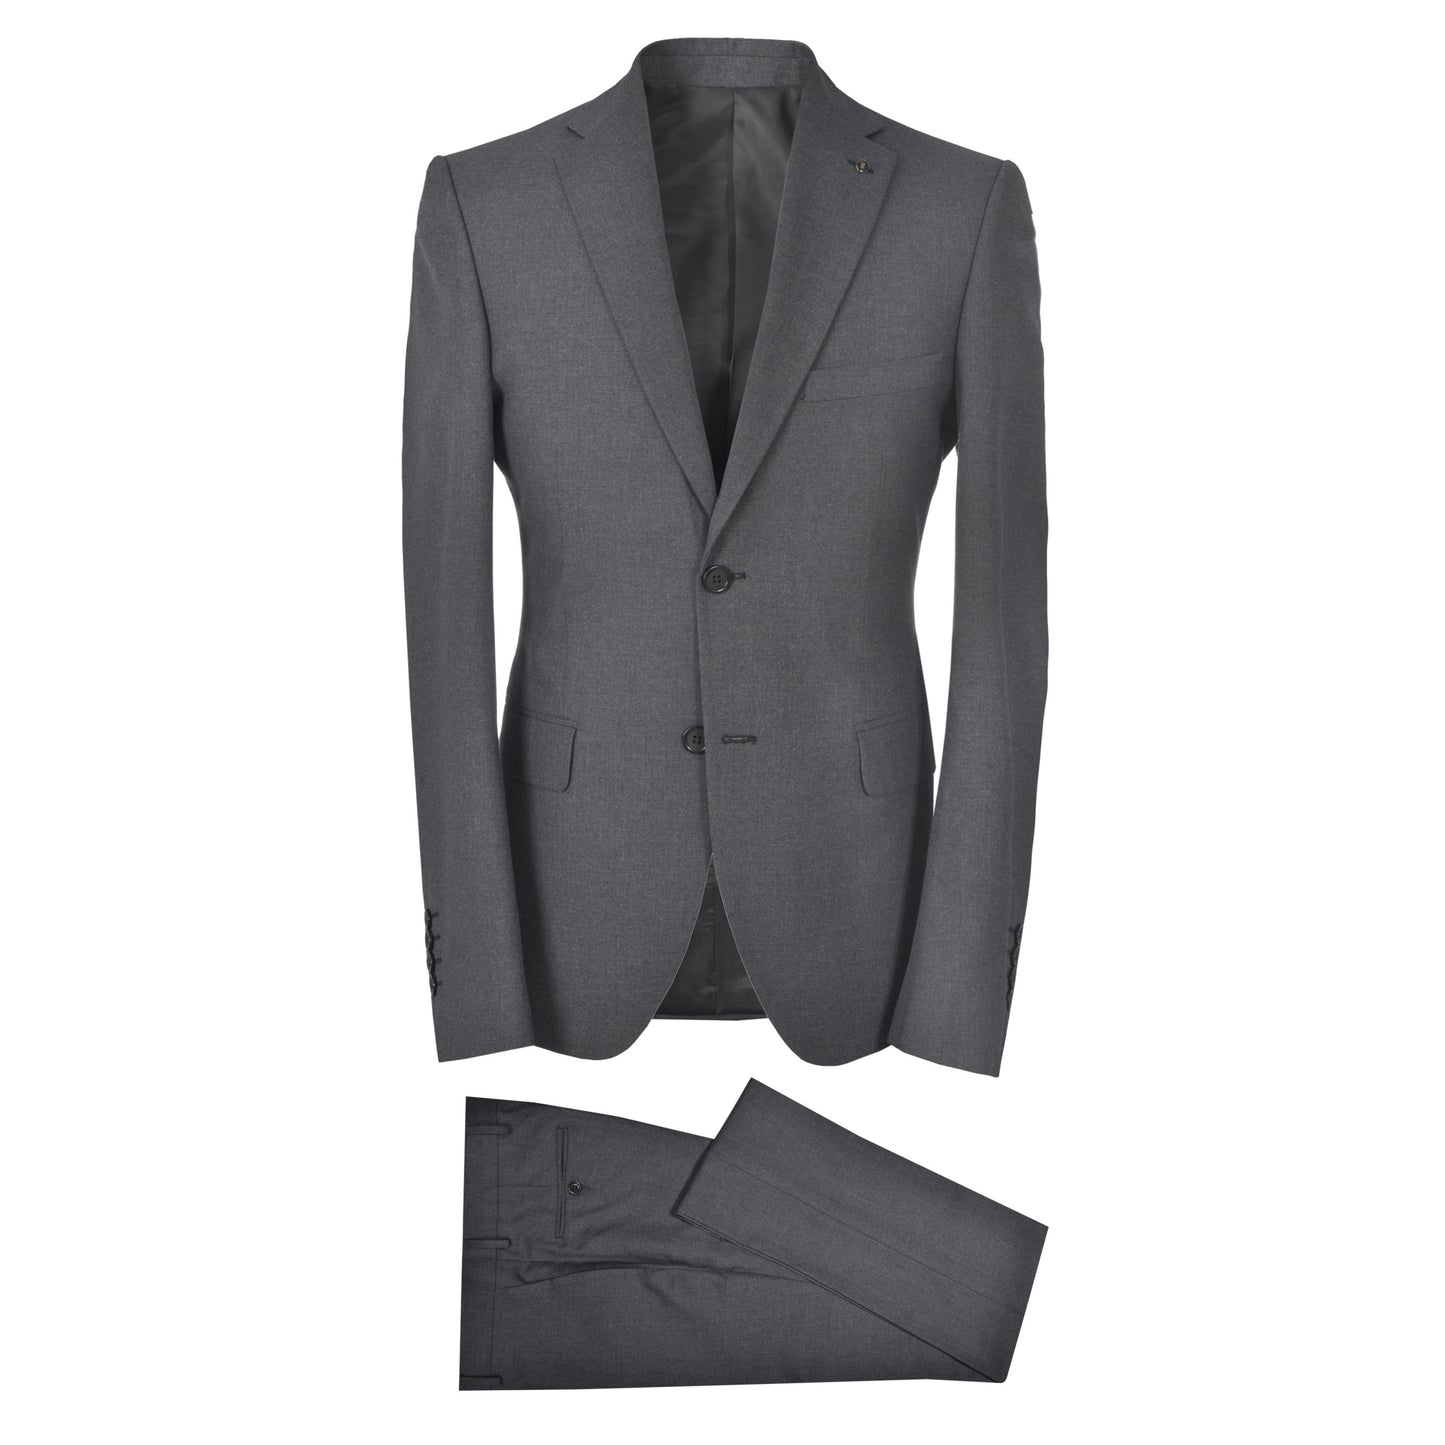 SALE! 2H Dark Grey Casual Suit